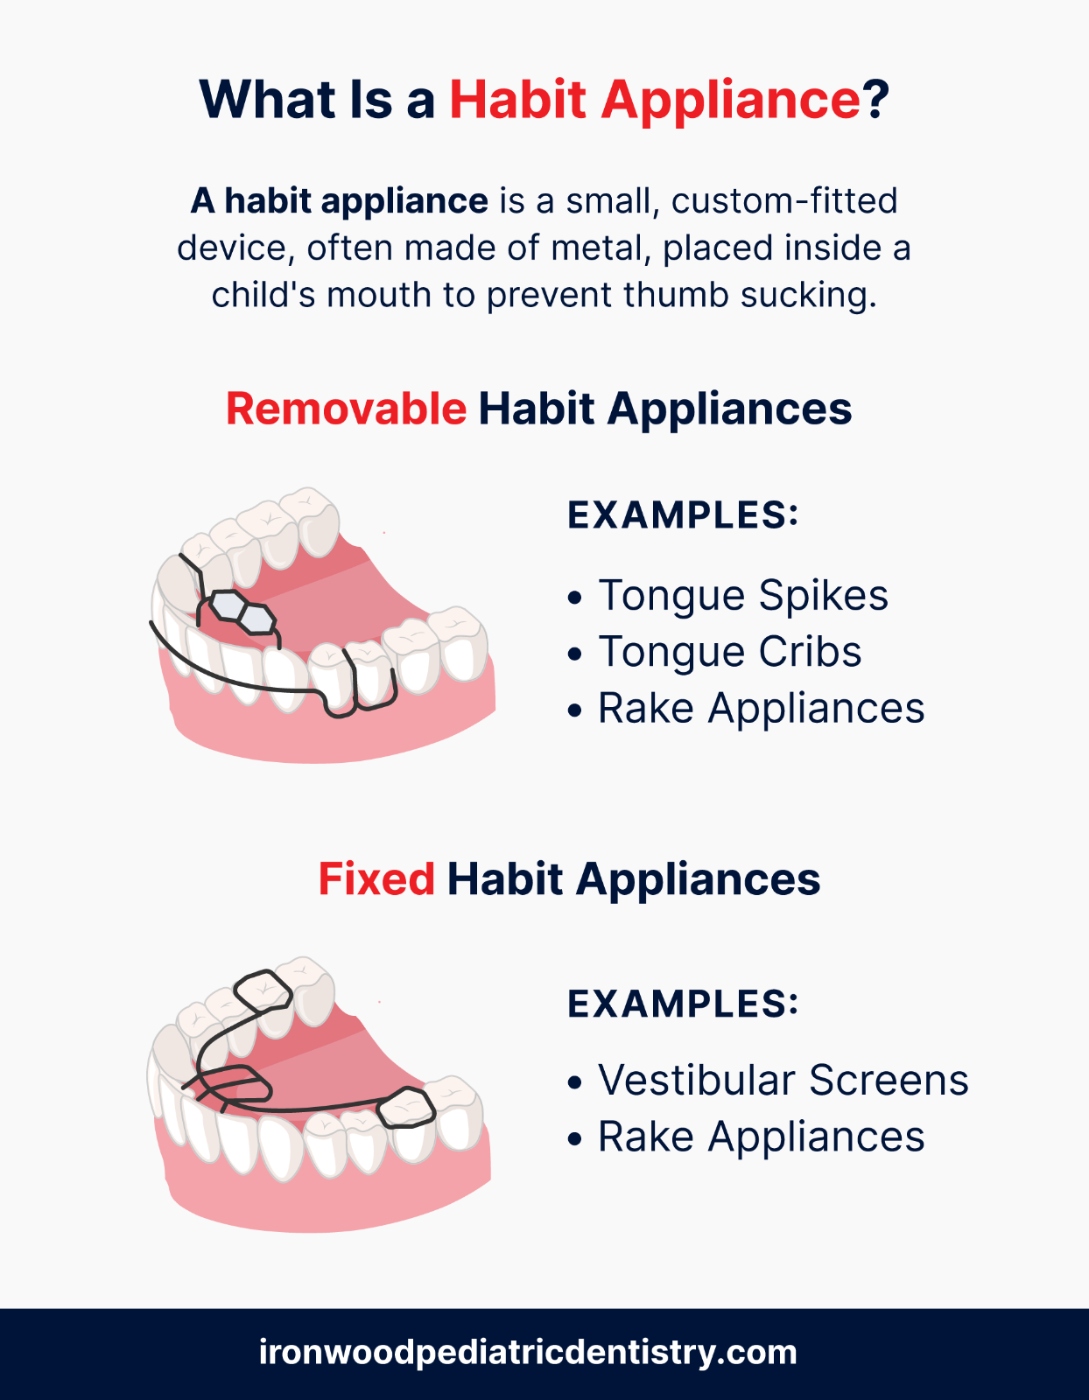 What is a habit appliance